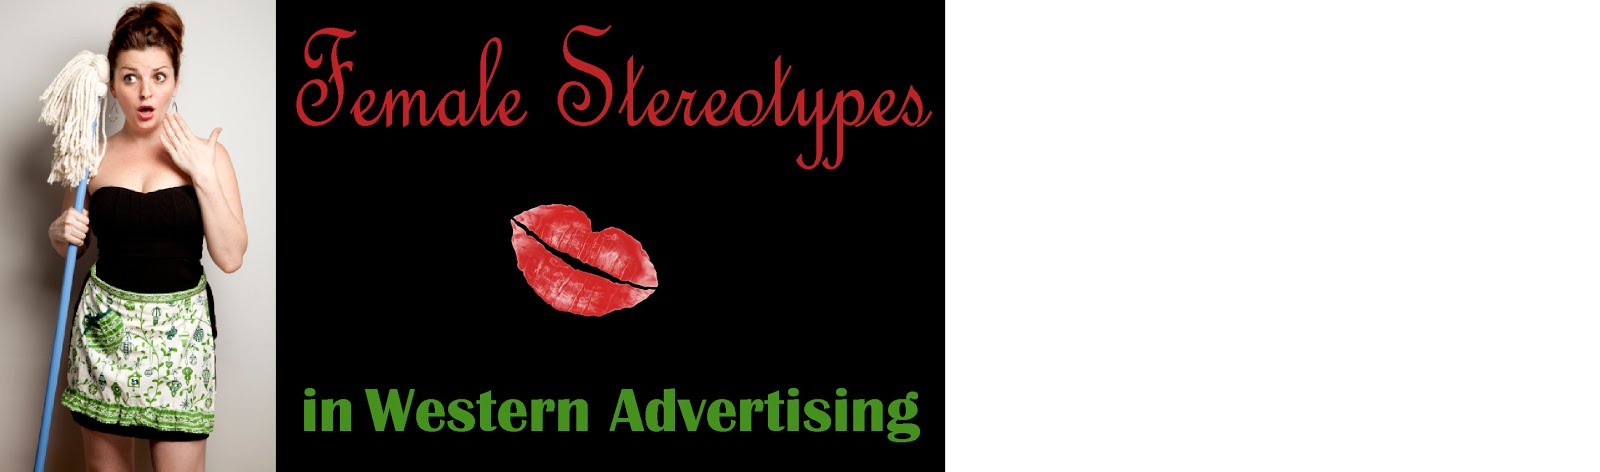 Female Stereotypes in Western Advertising